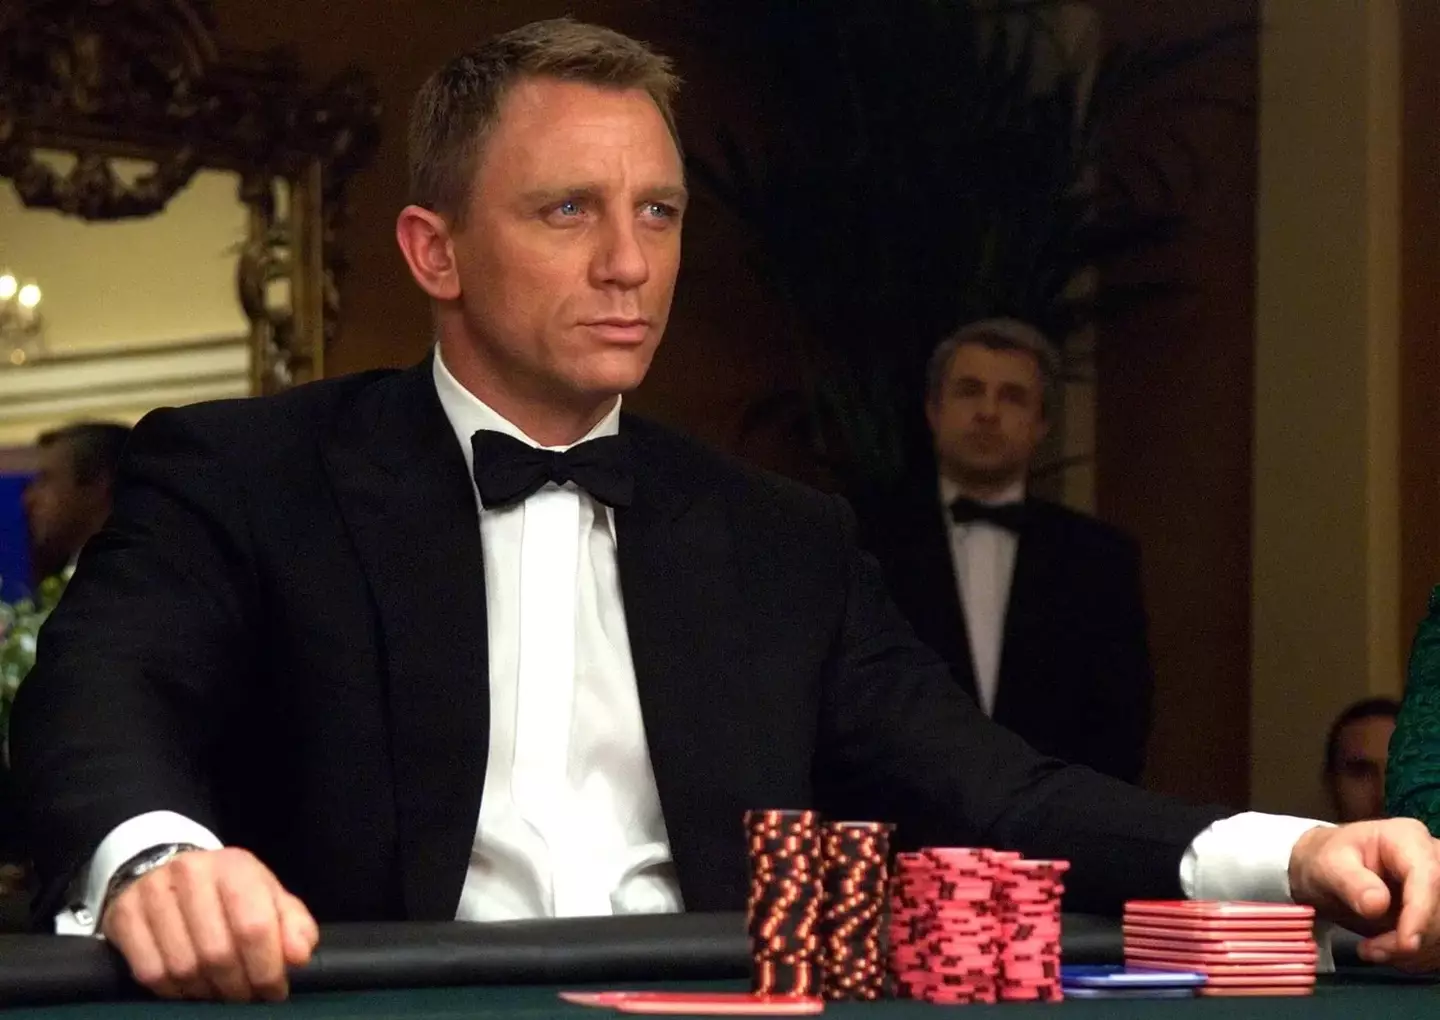 Daniel Craig in Casino Royale.